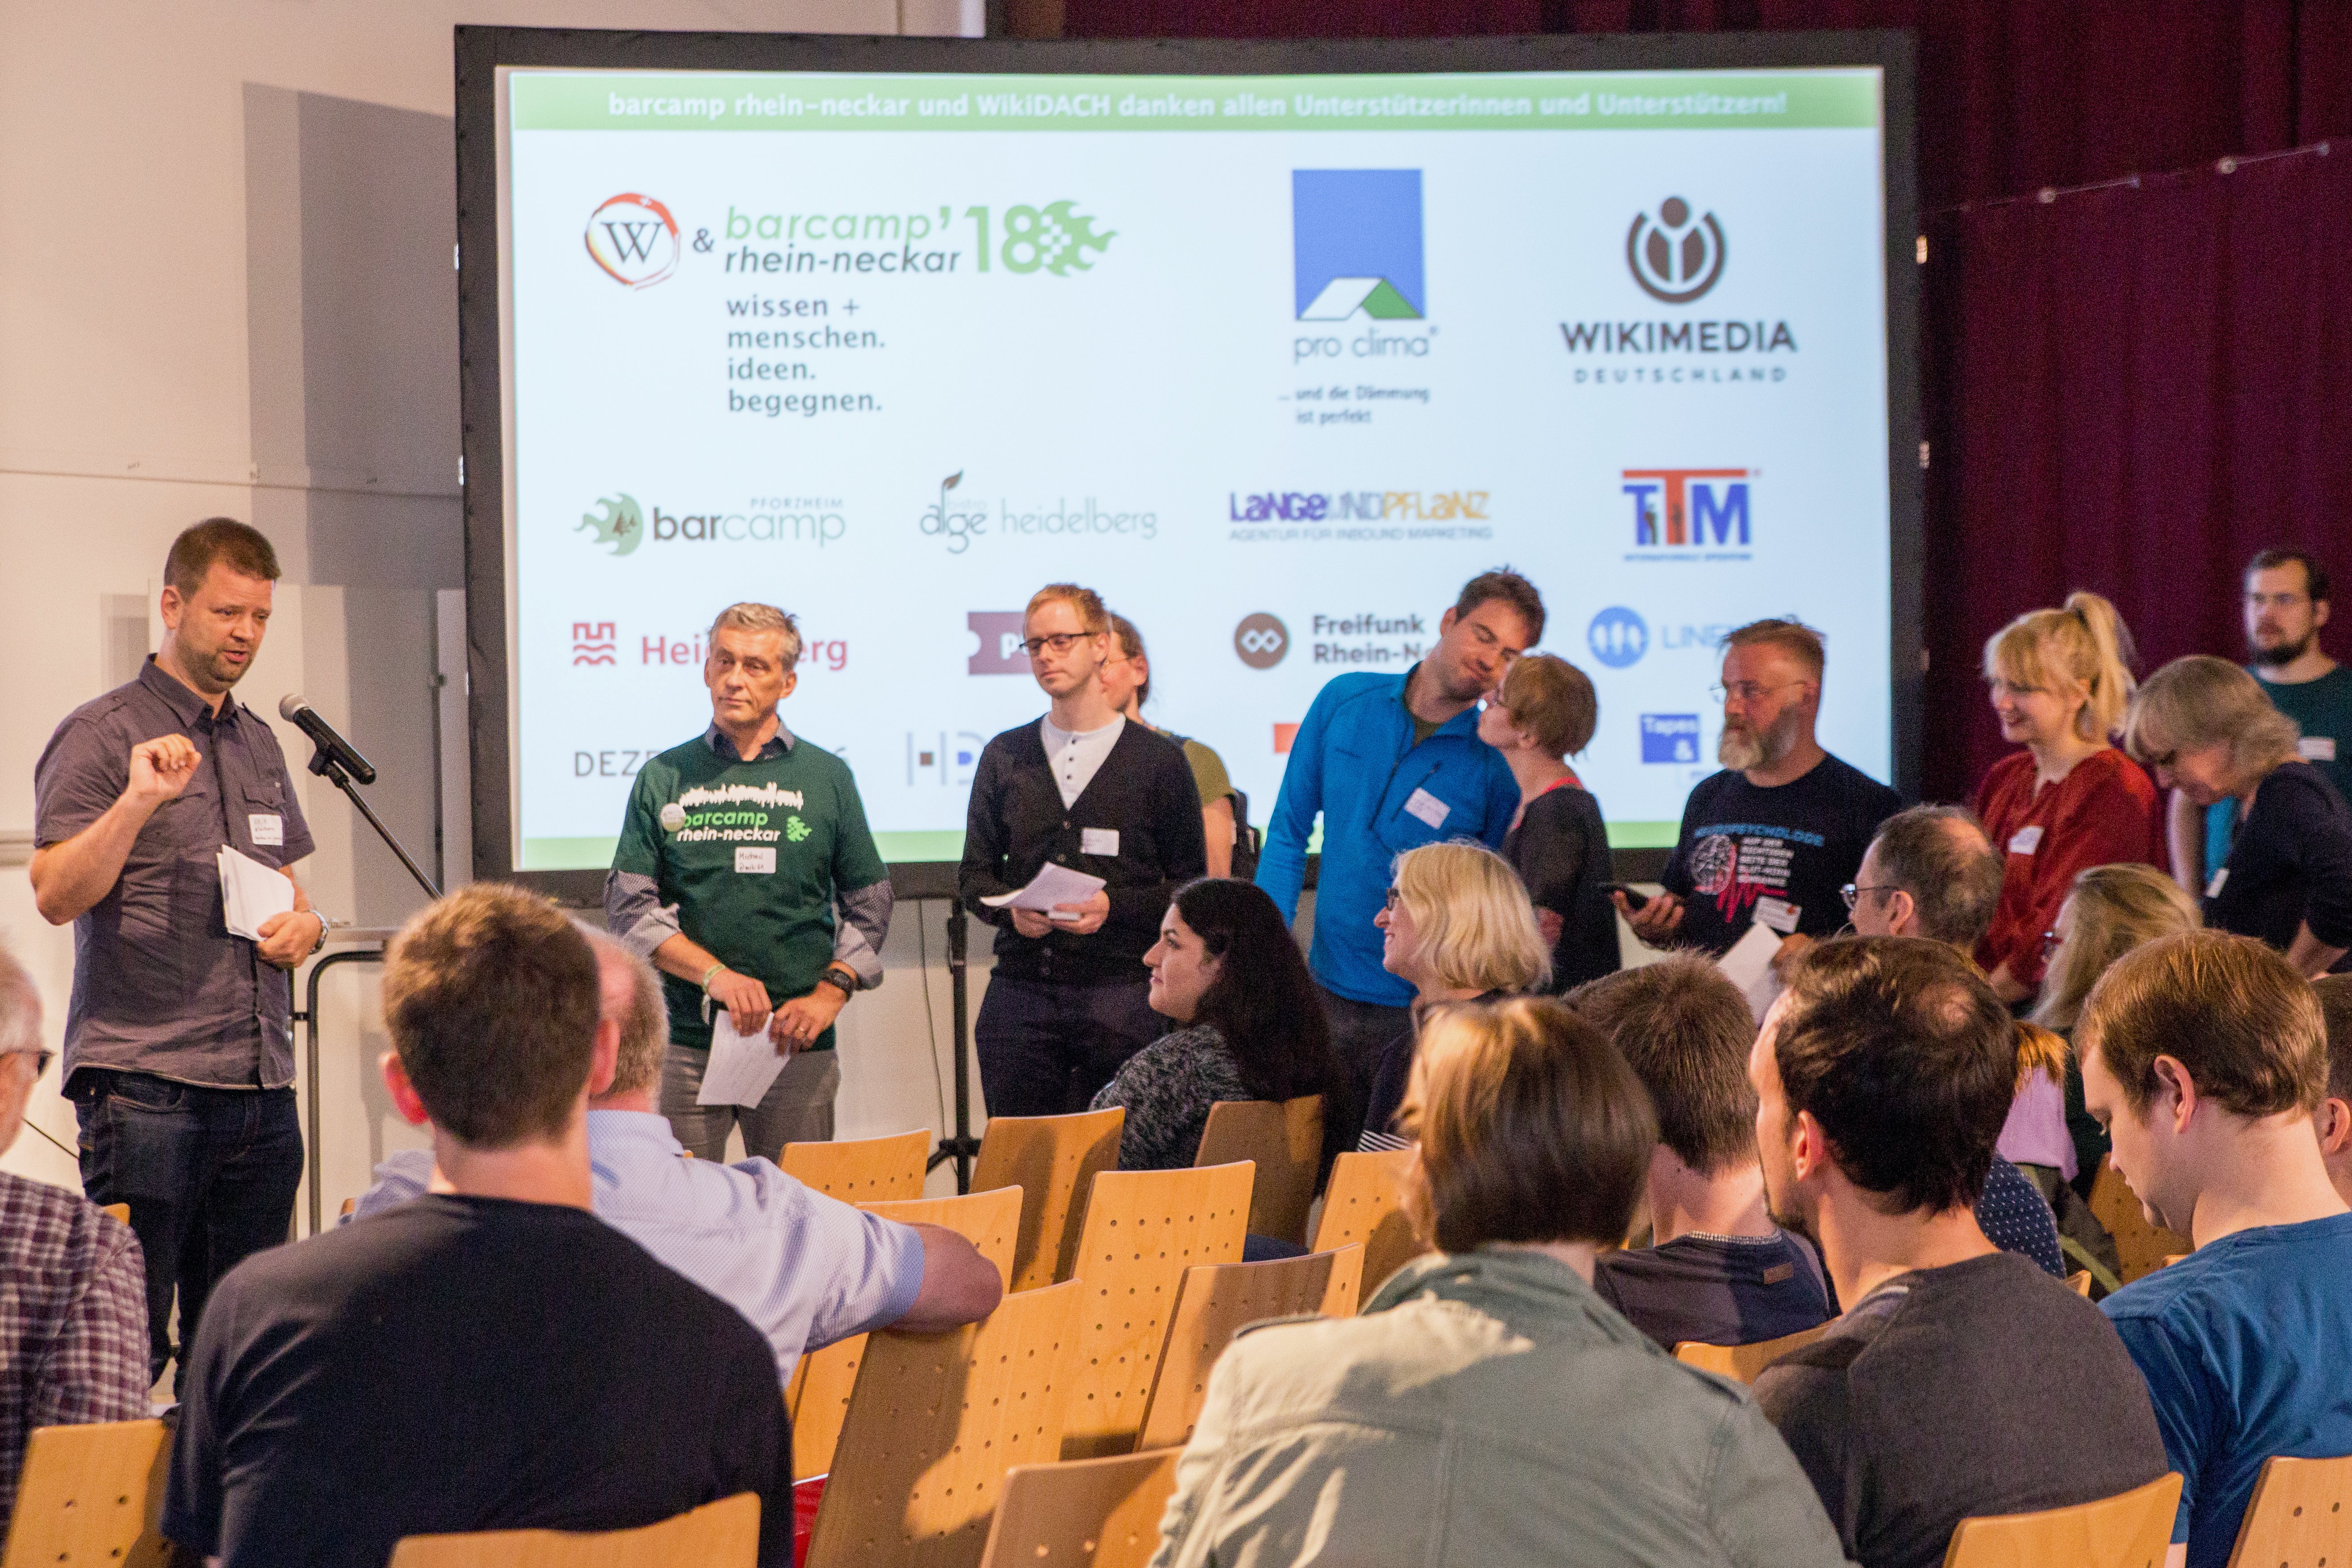 Datei:Barcamp-Rhein-Neckar-WikiDach-2018-Heidelberg-Sessionplanung-01.jpg